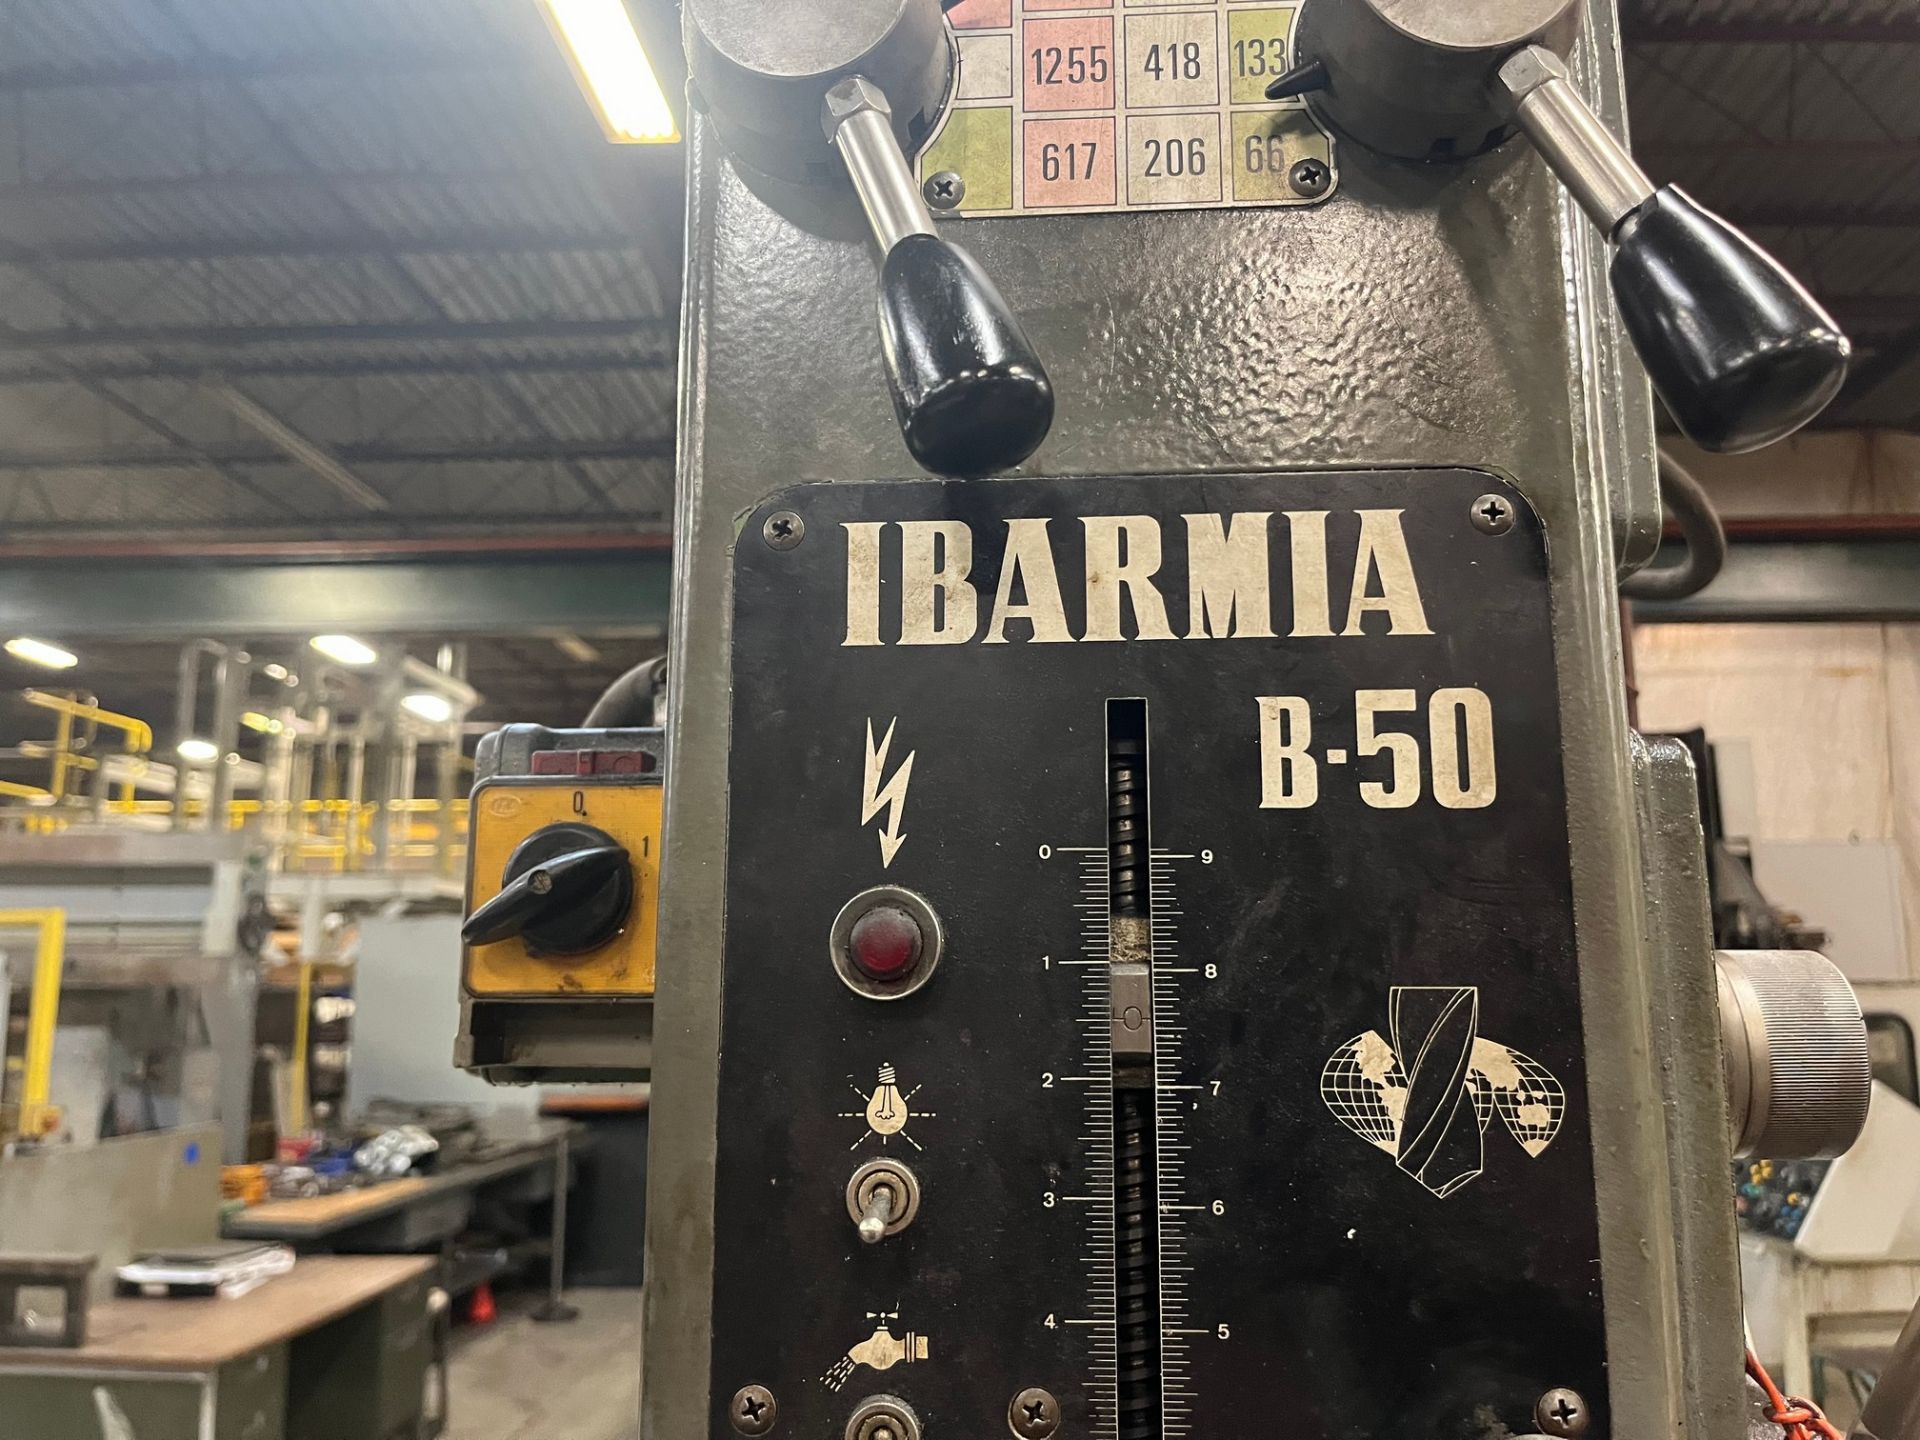 IBARMIA B-50 GEAR HEAD DRILL PRESS, 66 – 1,255 RPM, POWER FEED, S/N 643C W/ MACHINE VISE, TOOLING, - Image 5 of 6